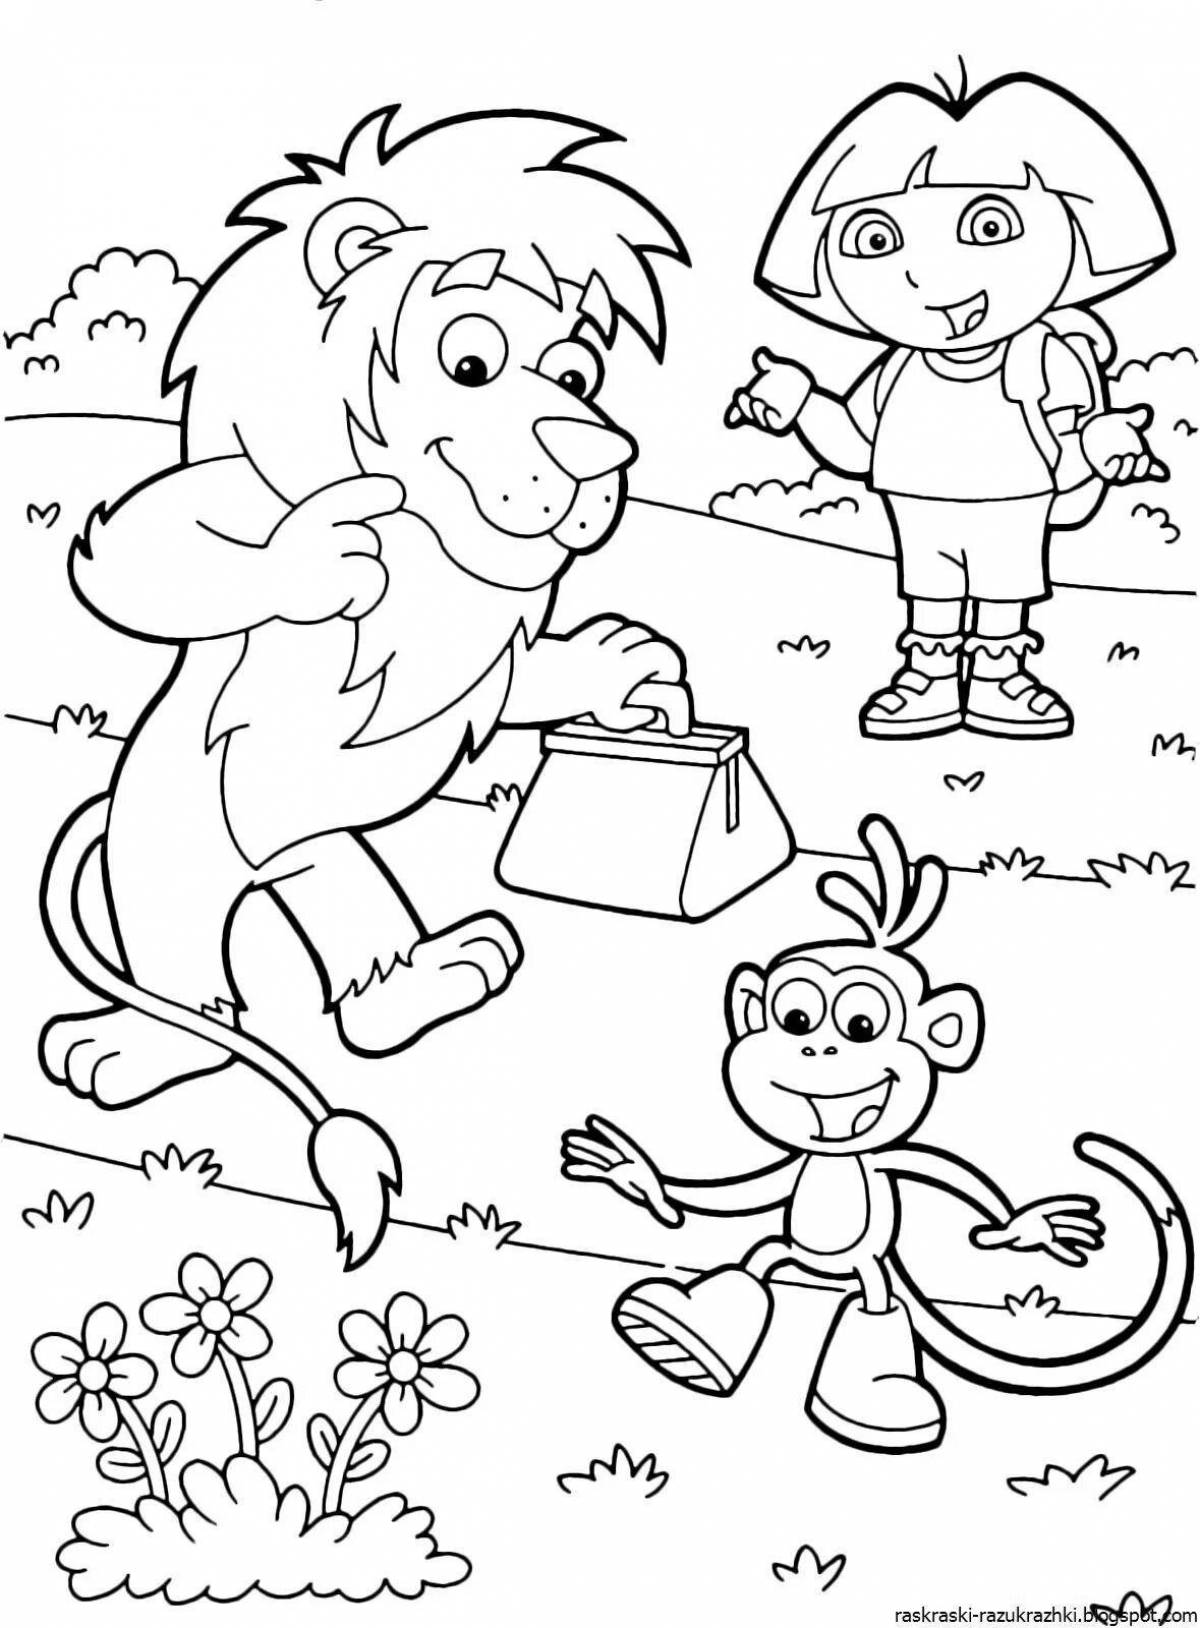 Fun coloring book for 5-6 year old cartoon kids